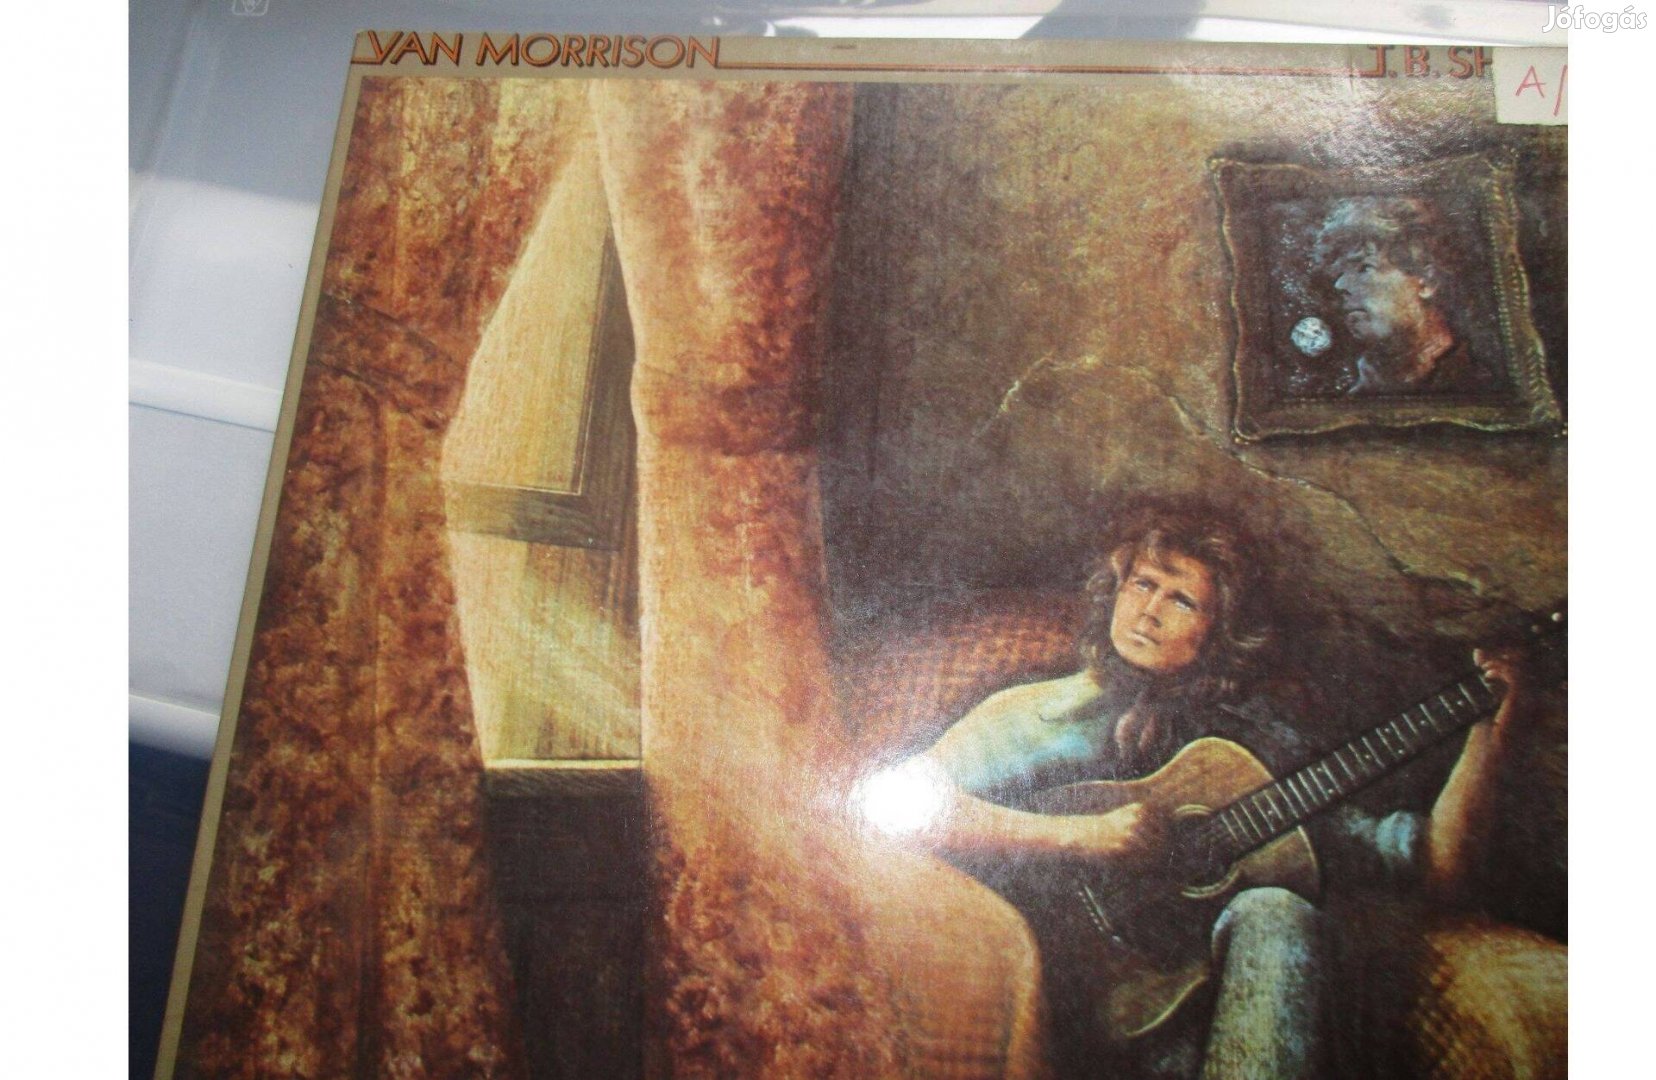 Van Morrison bakelit hanglemez eladó